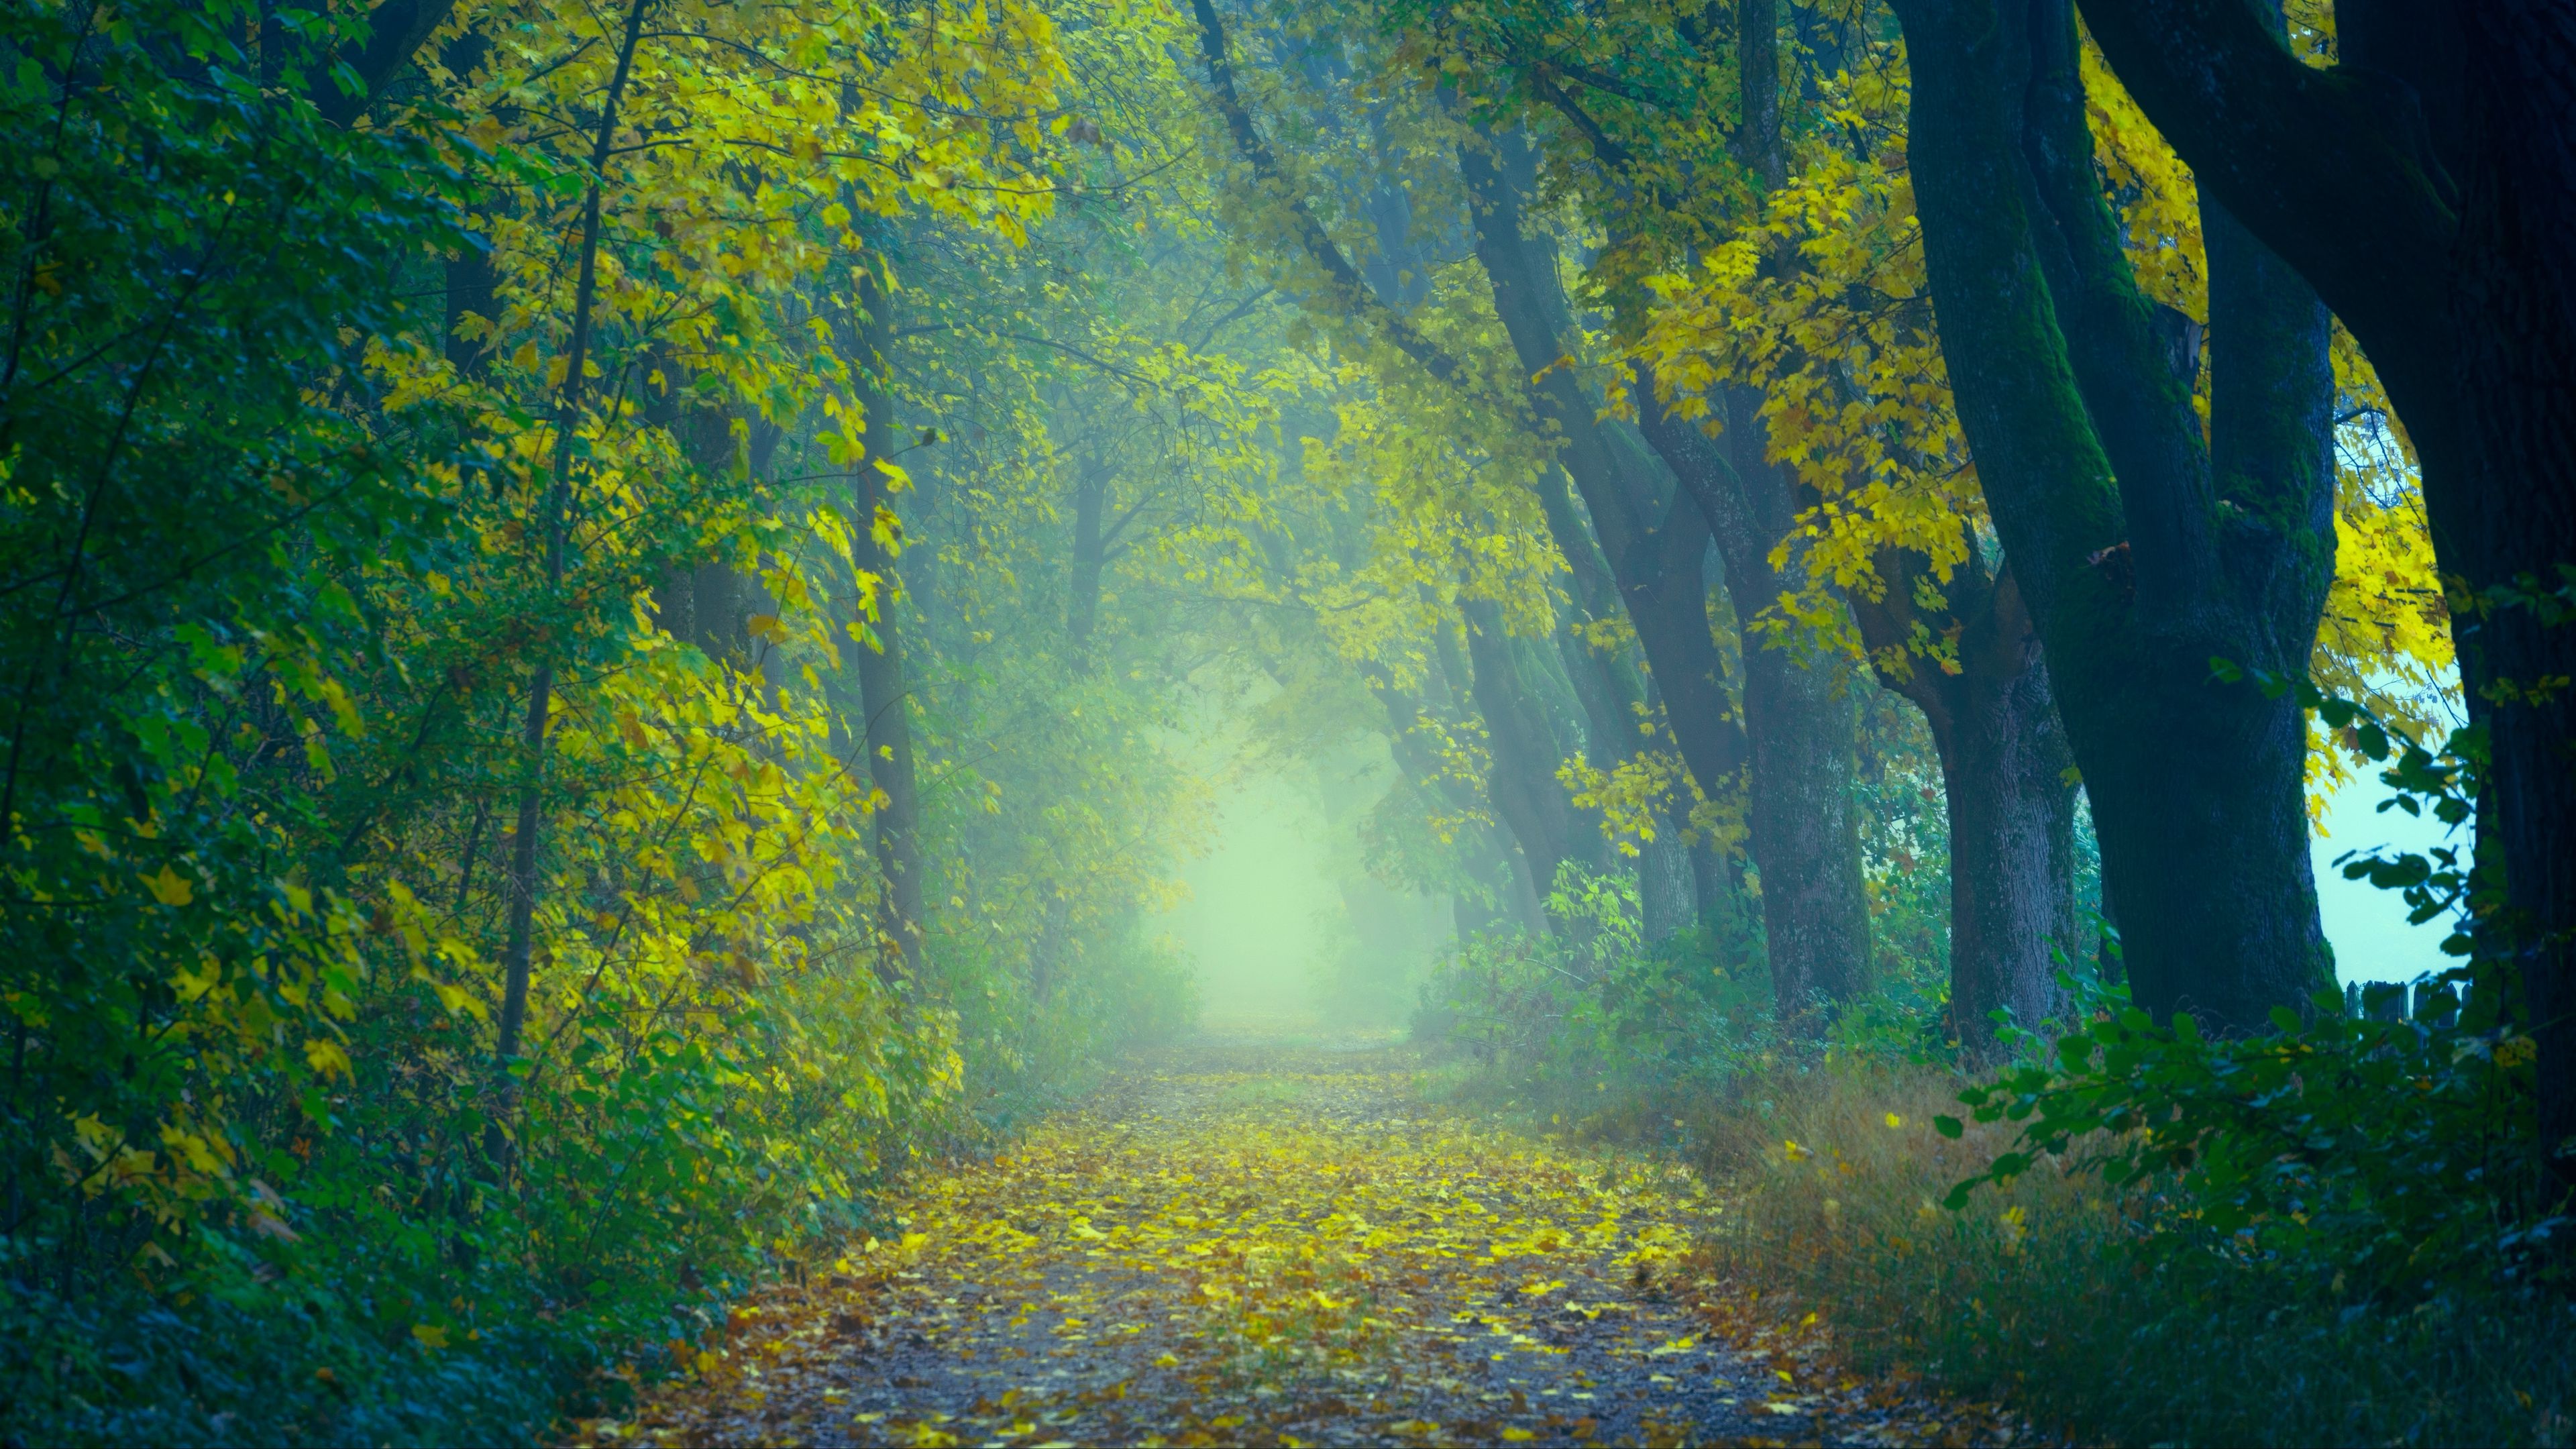 Download wallpaper 3840x2160 autumn, path, fog, foliage, blur, forest 4k uhd  16:9 hd background